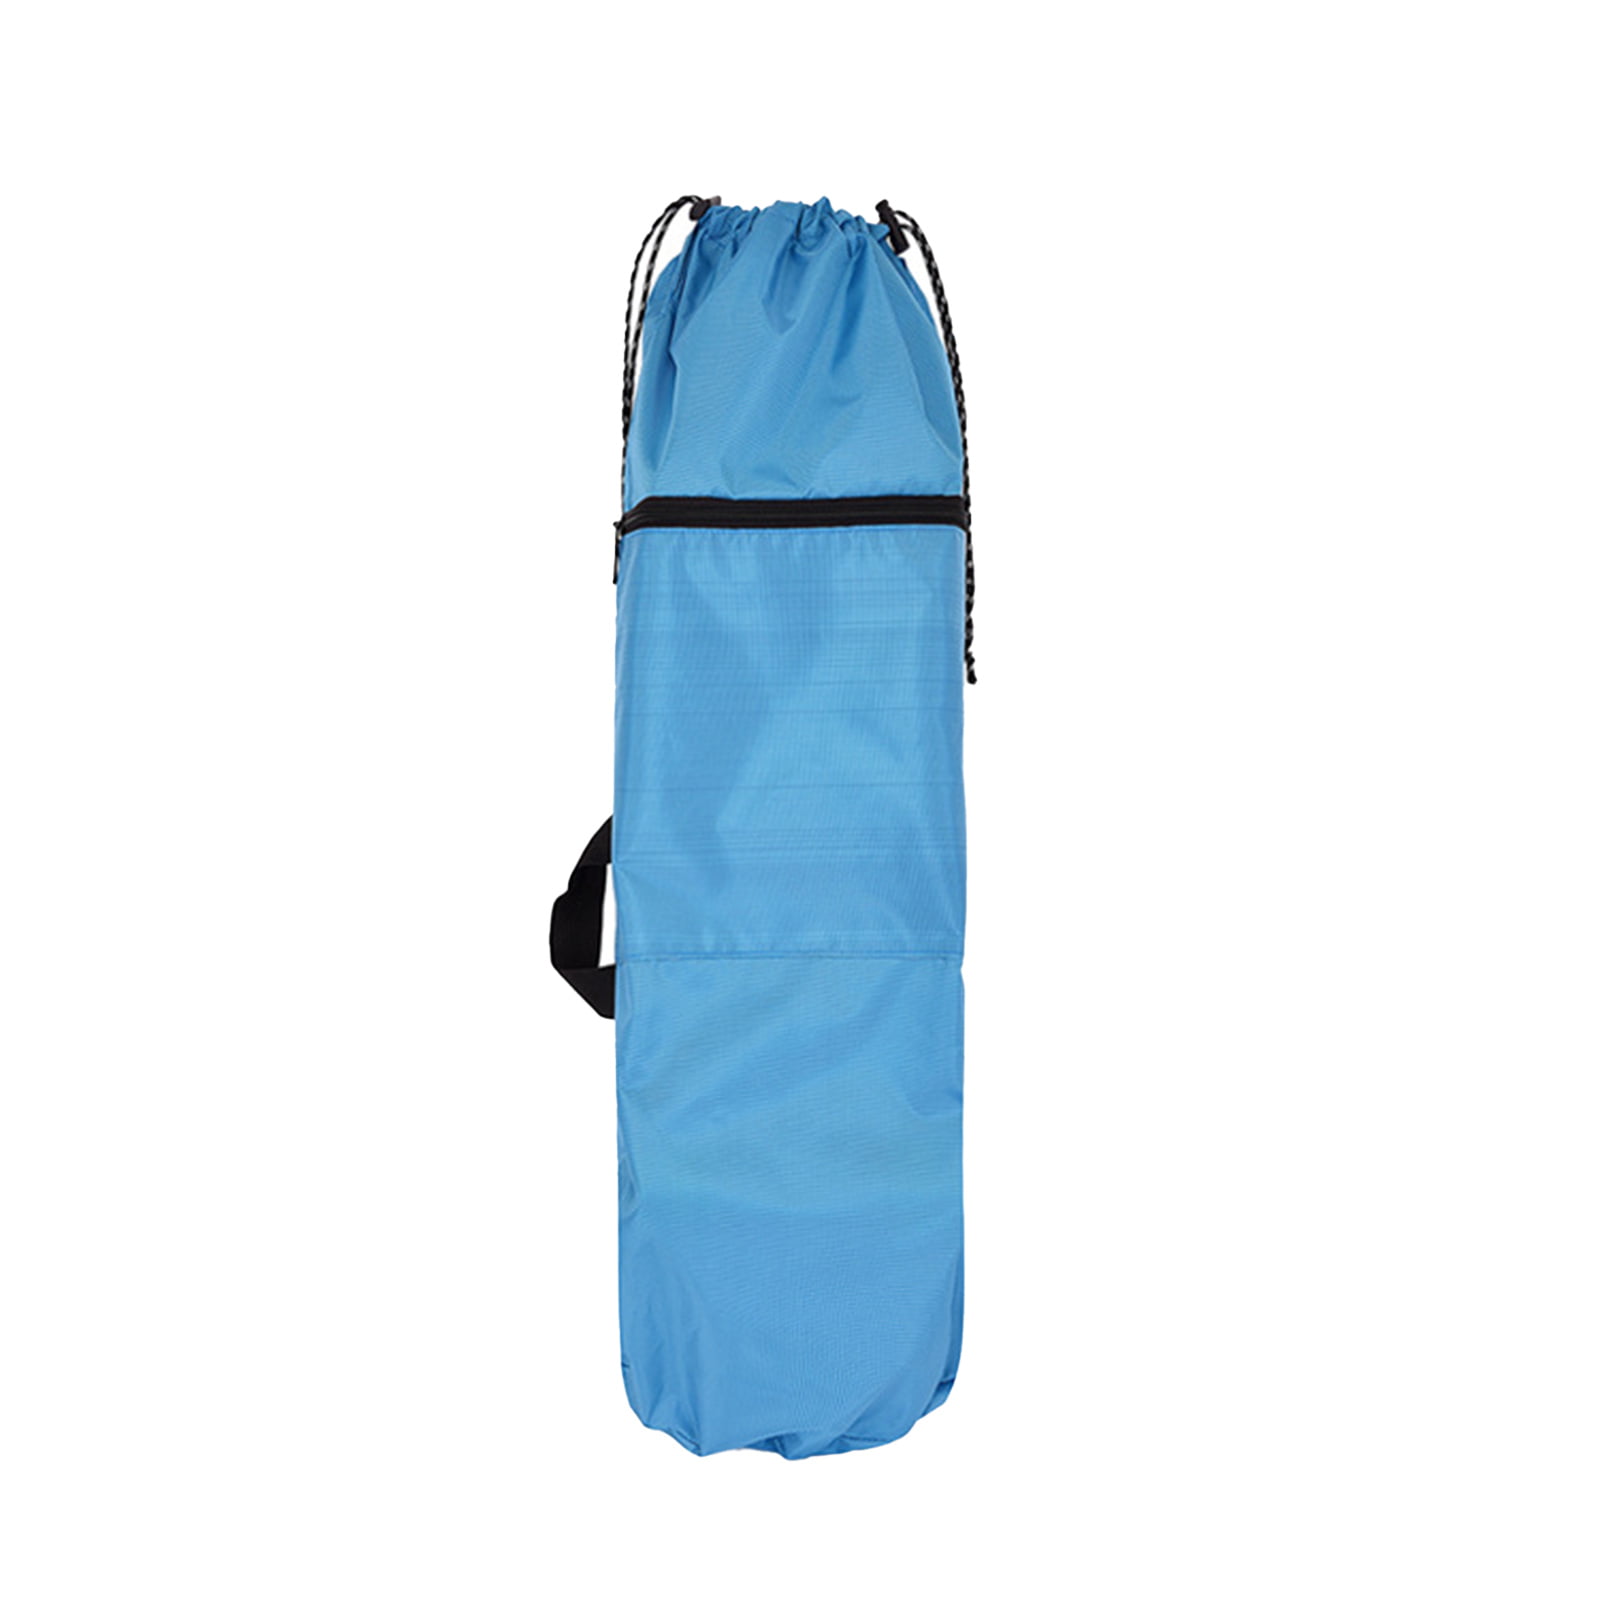 SANWOOD Skateboard Bag Waterproof Canvas Solid Color Camouflage Zip Drawstring Adjustable Strap Longboard Storage Bag for Outdoor